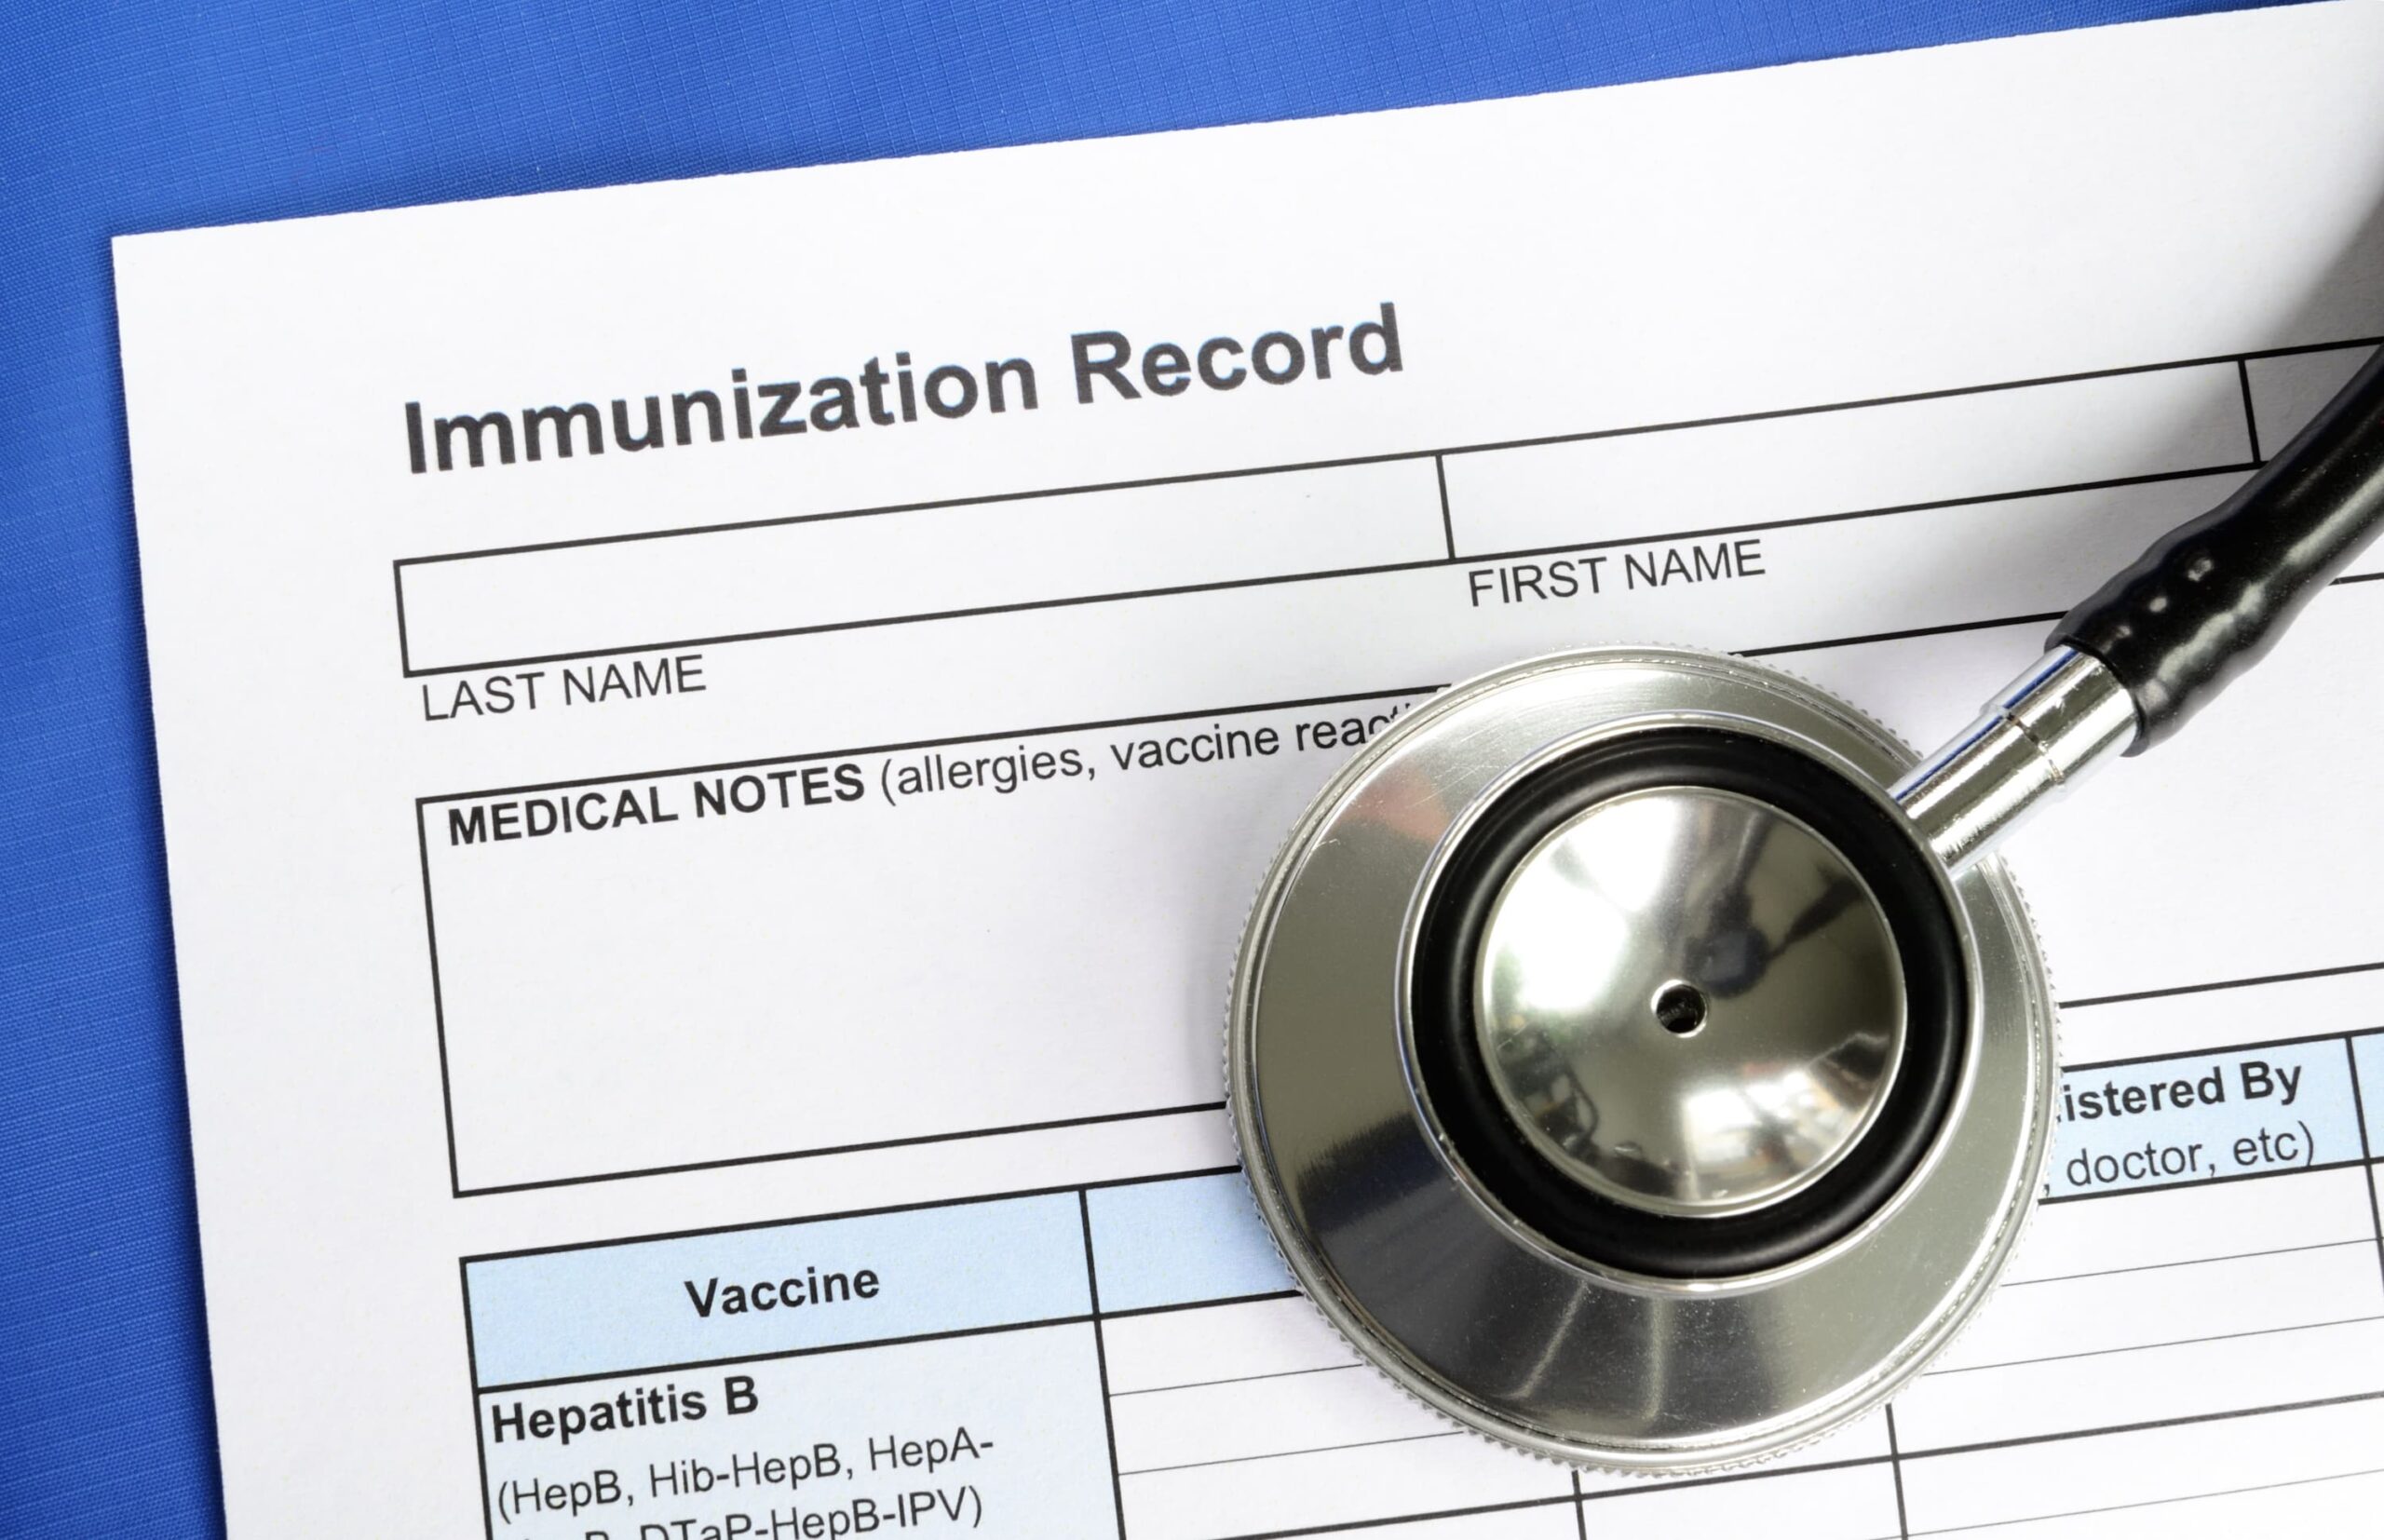 A blank Immunization Record paper.